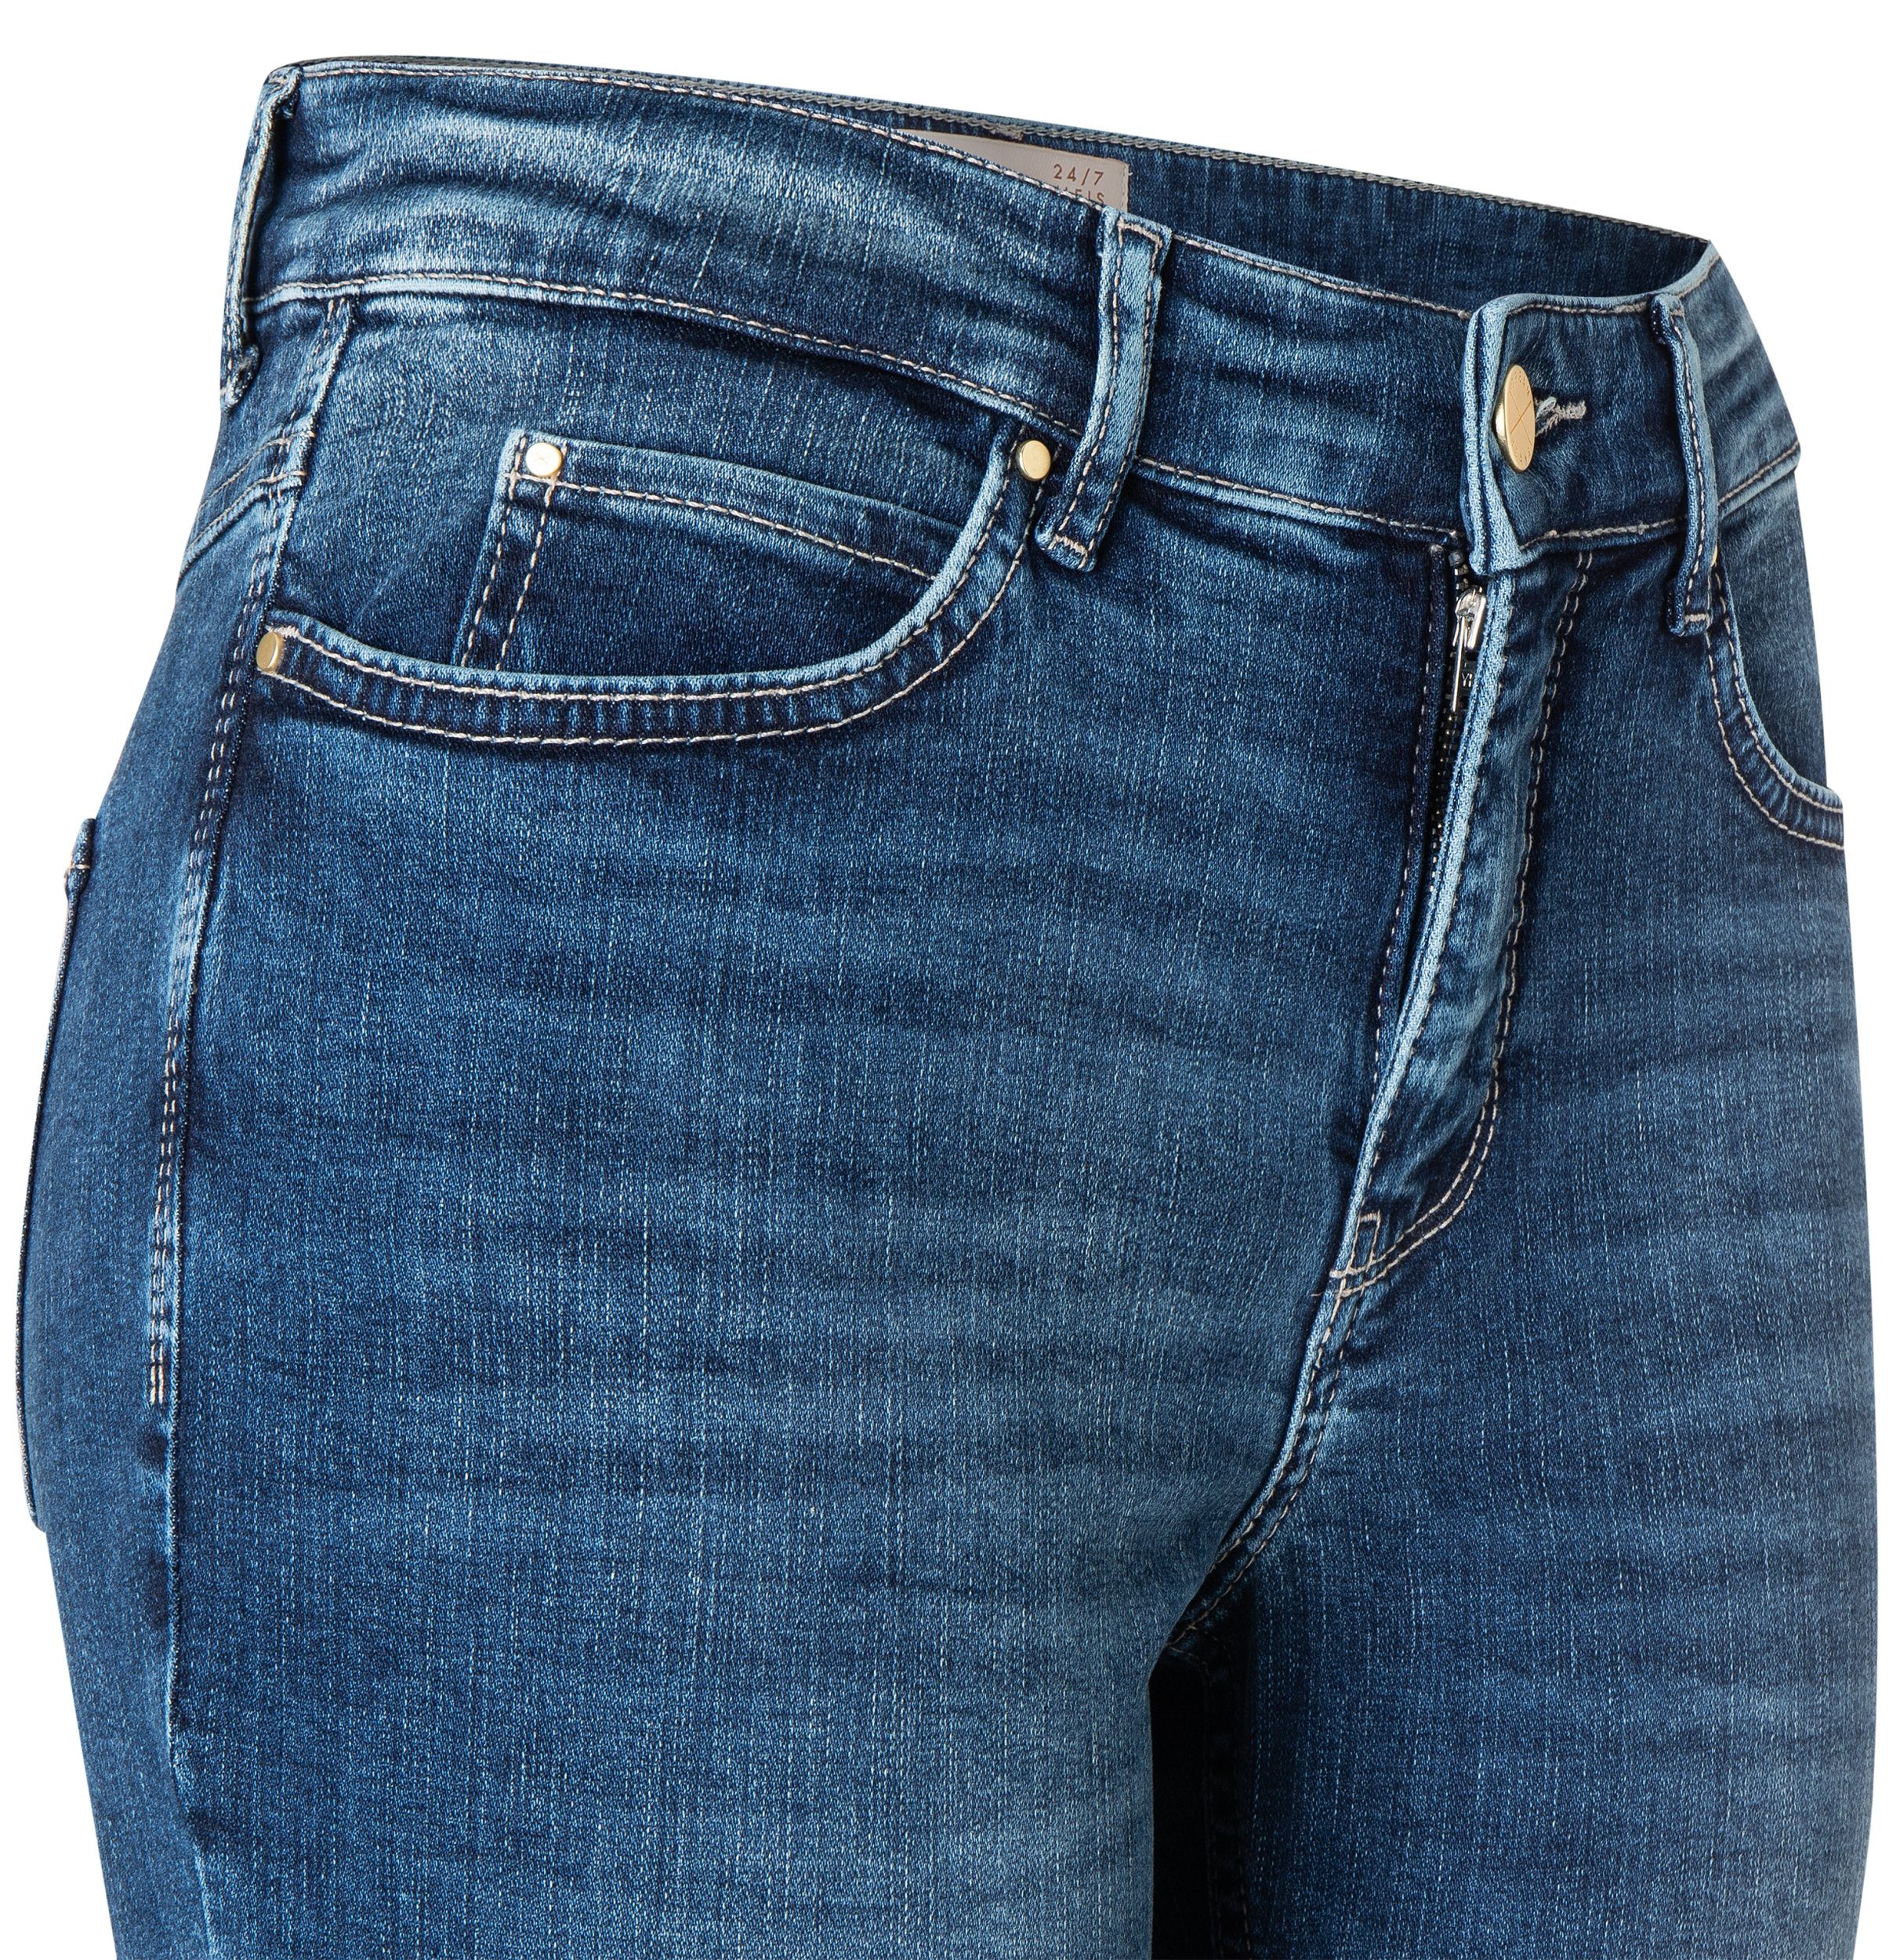 MAC SKINNY 5-Pocket-Jeans DREAM